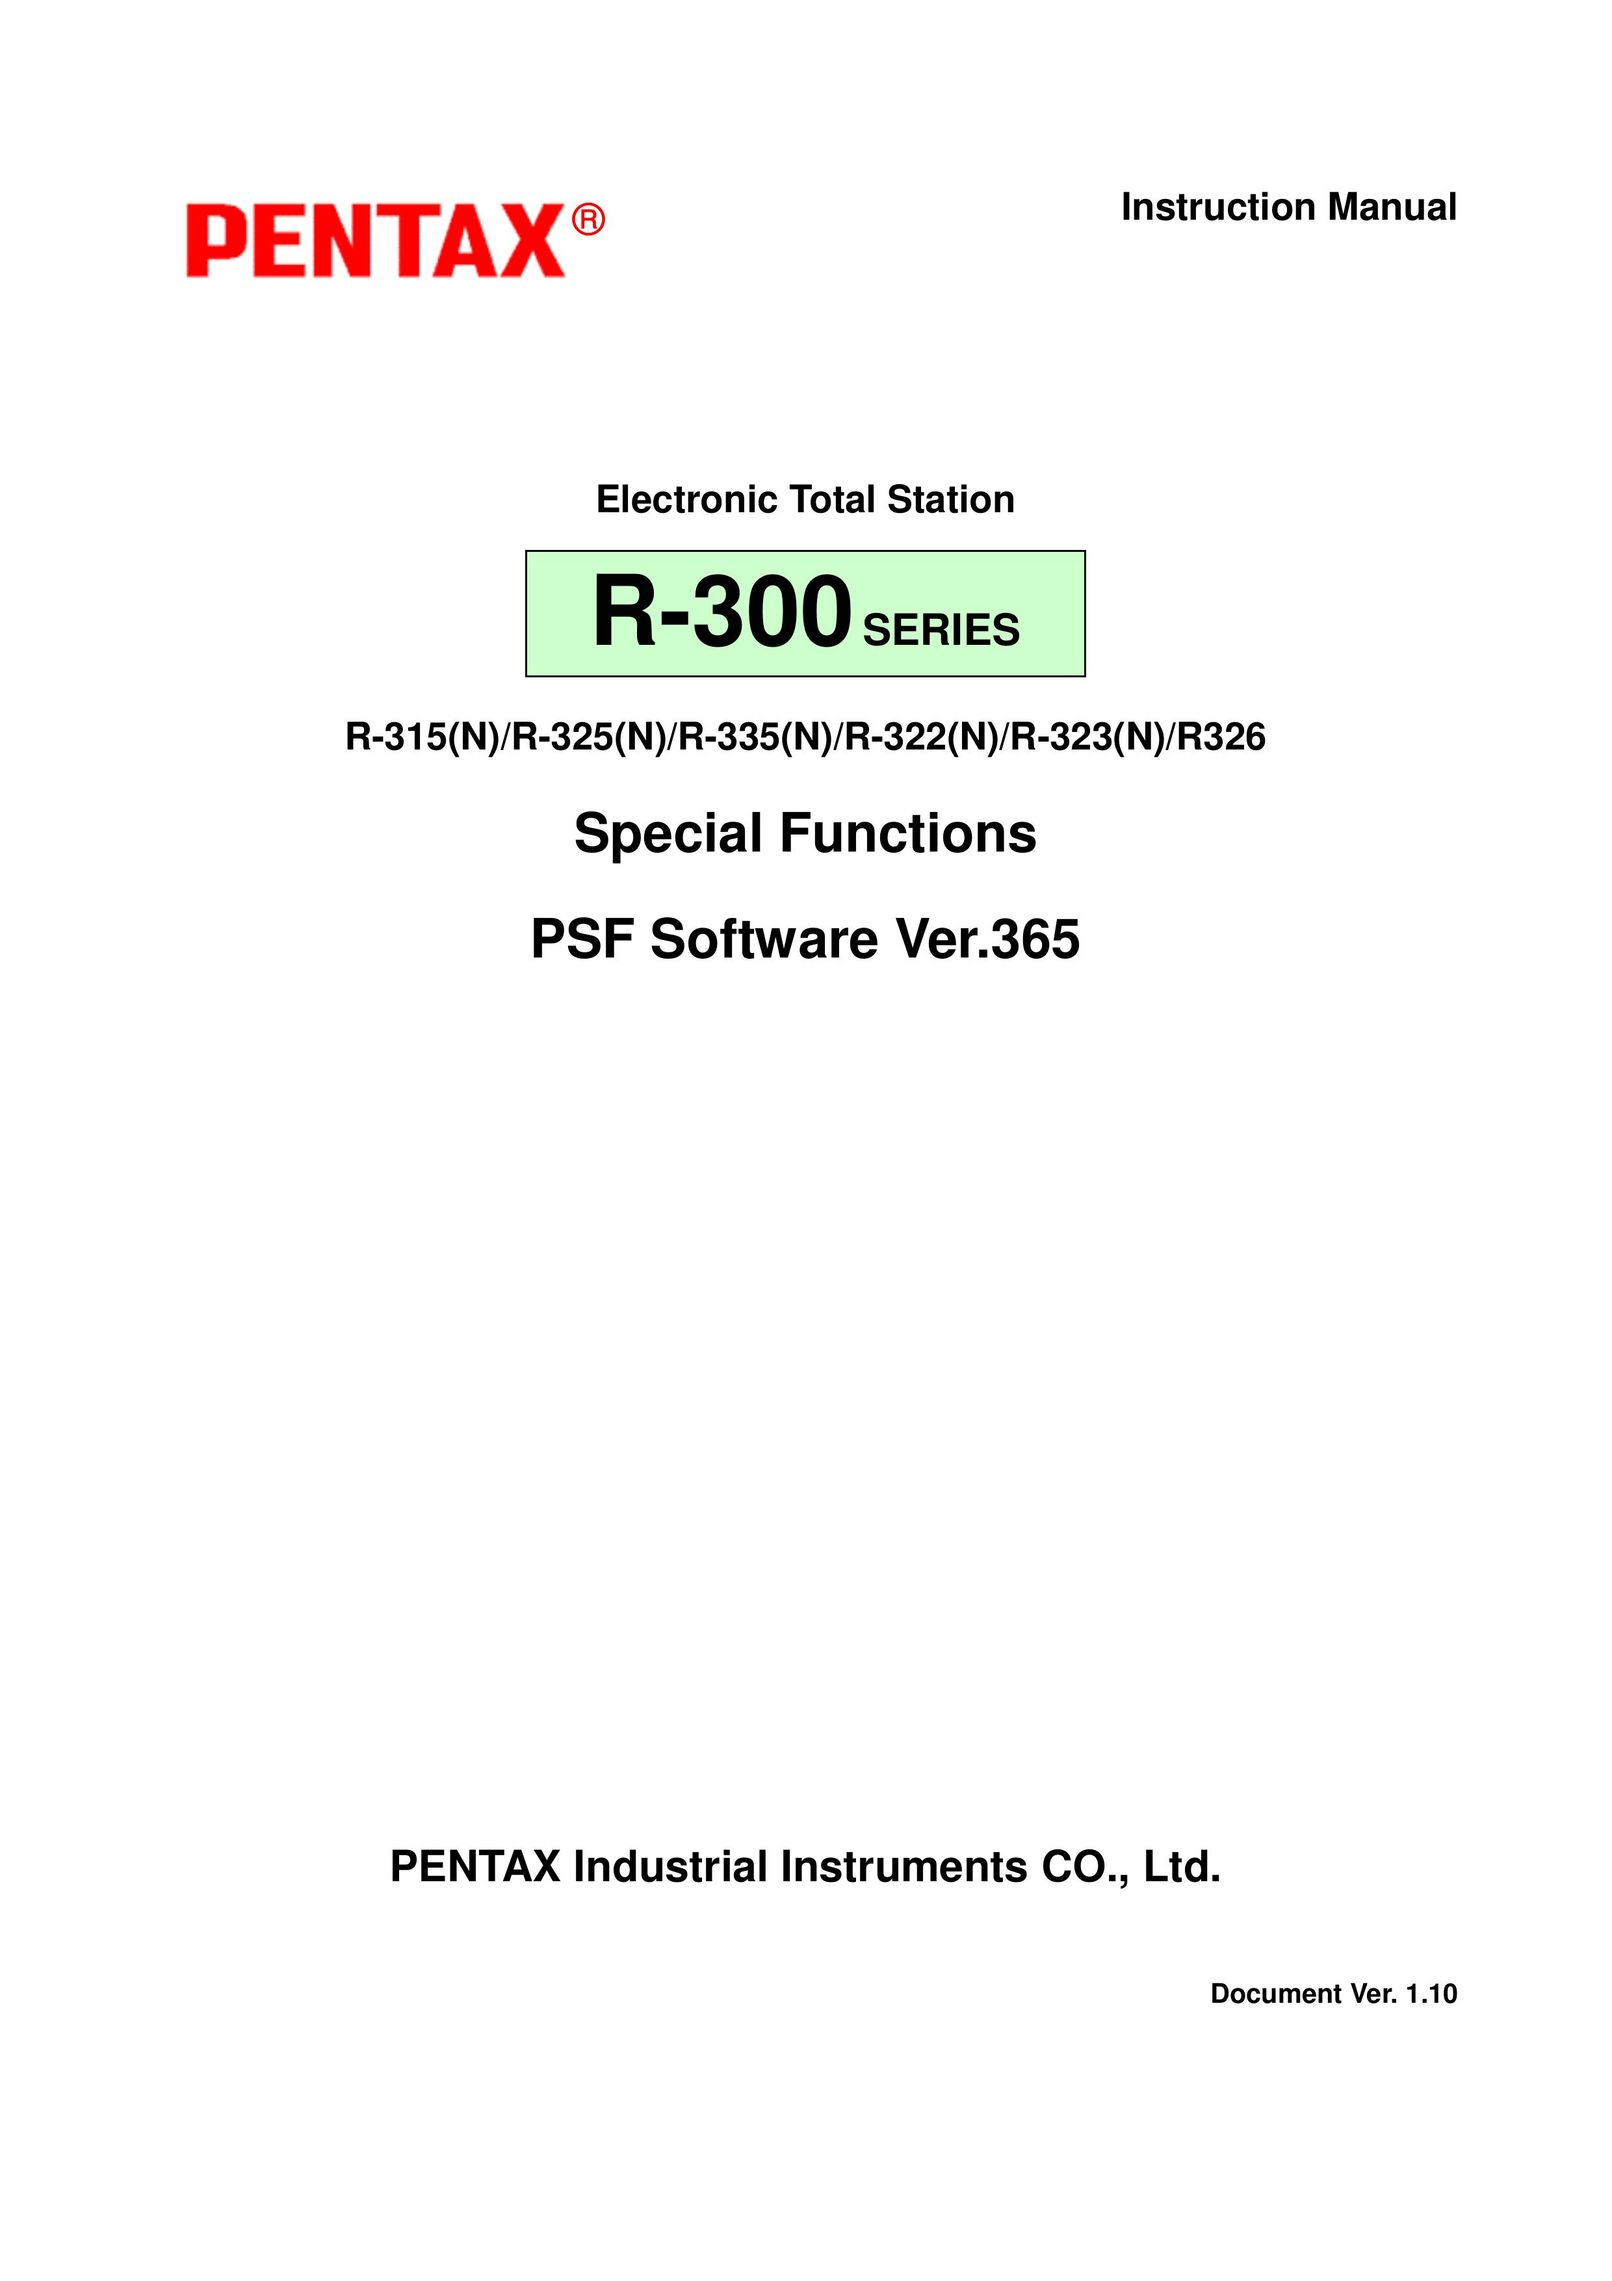 Pentax R-335(N) Home Gym User Manual